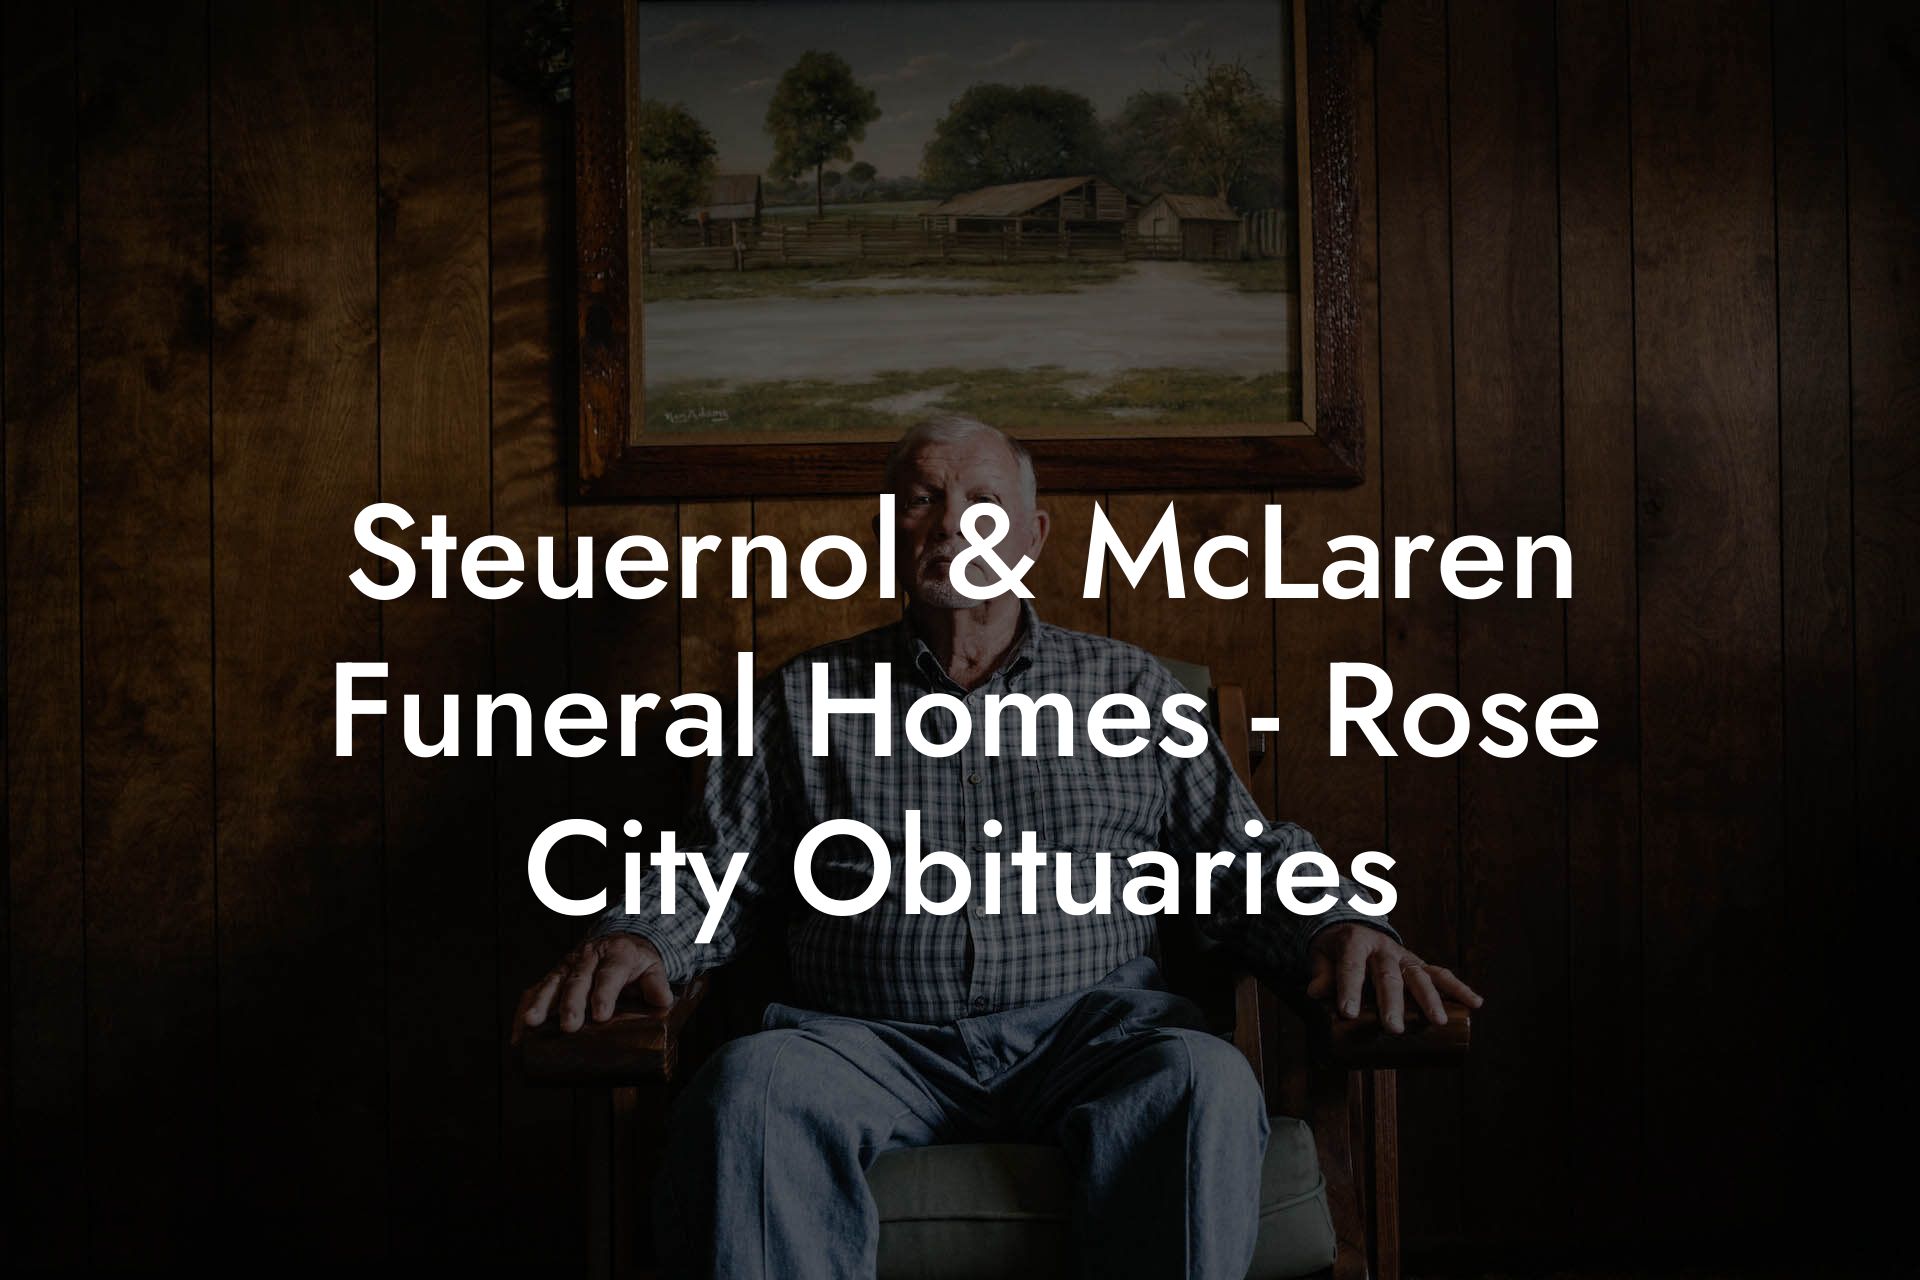 Steuernol & McLaren Funeral Homes - Rose City Obituaries